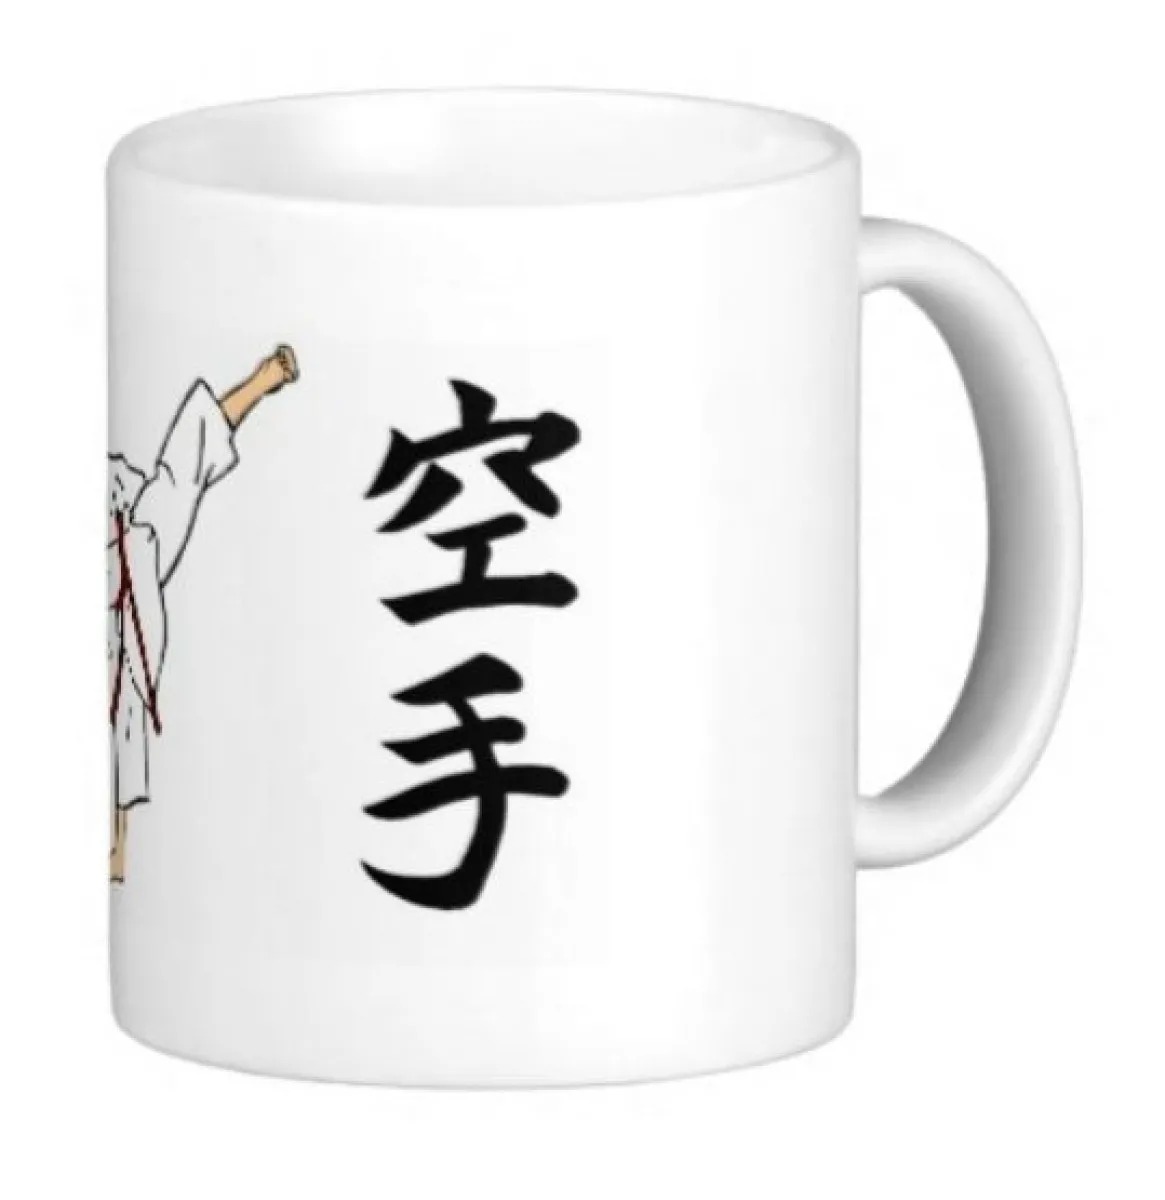 Mug white printed with karate figure